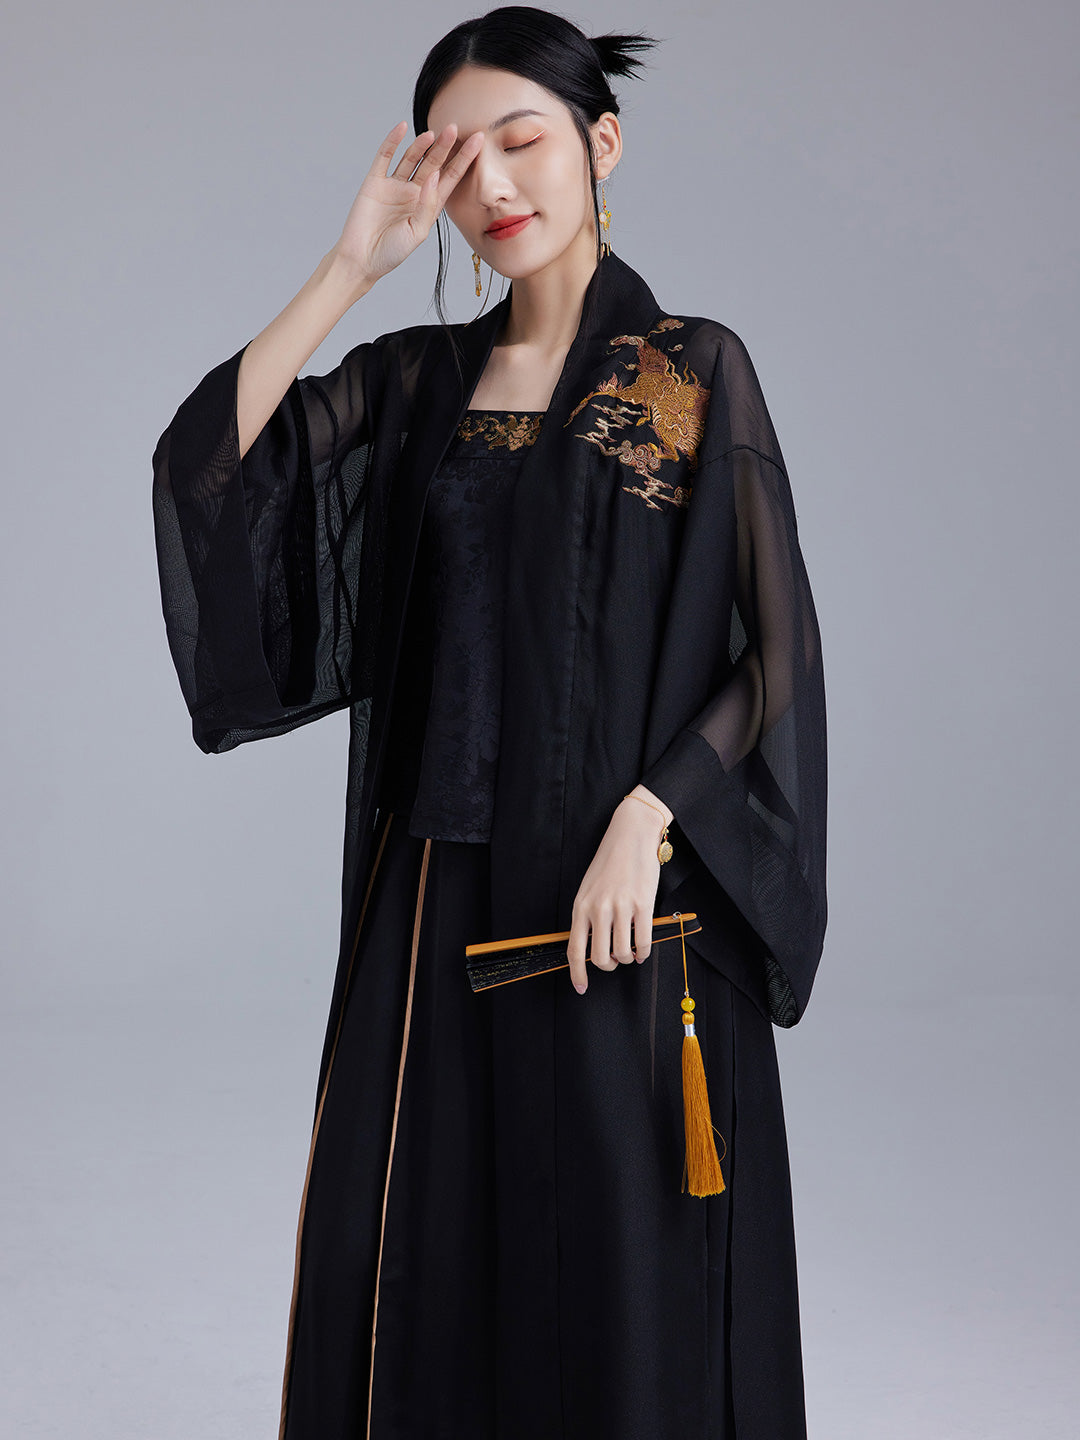 Charlee Splendid Qipao Cheongsam Translucent Coat